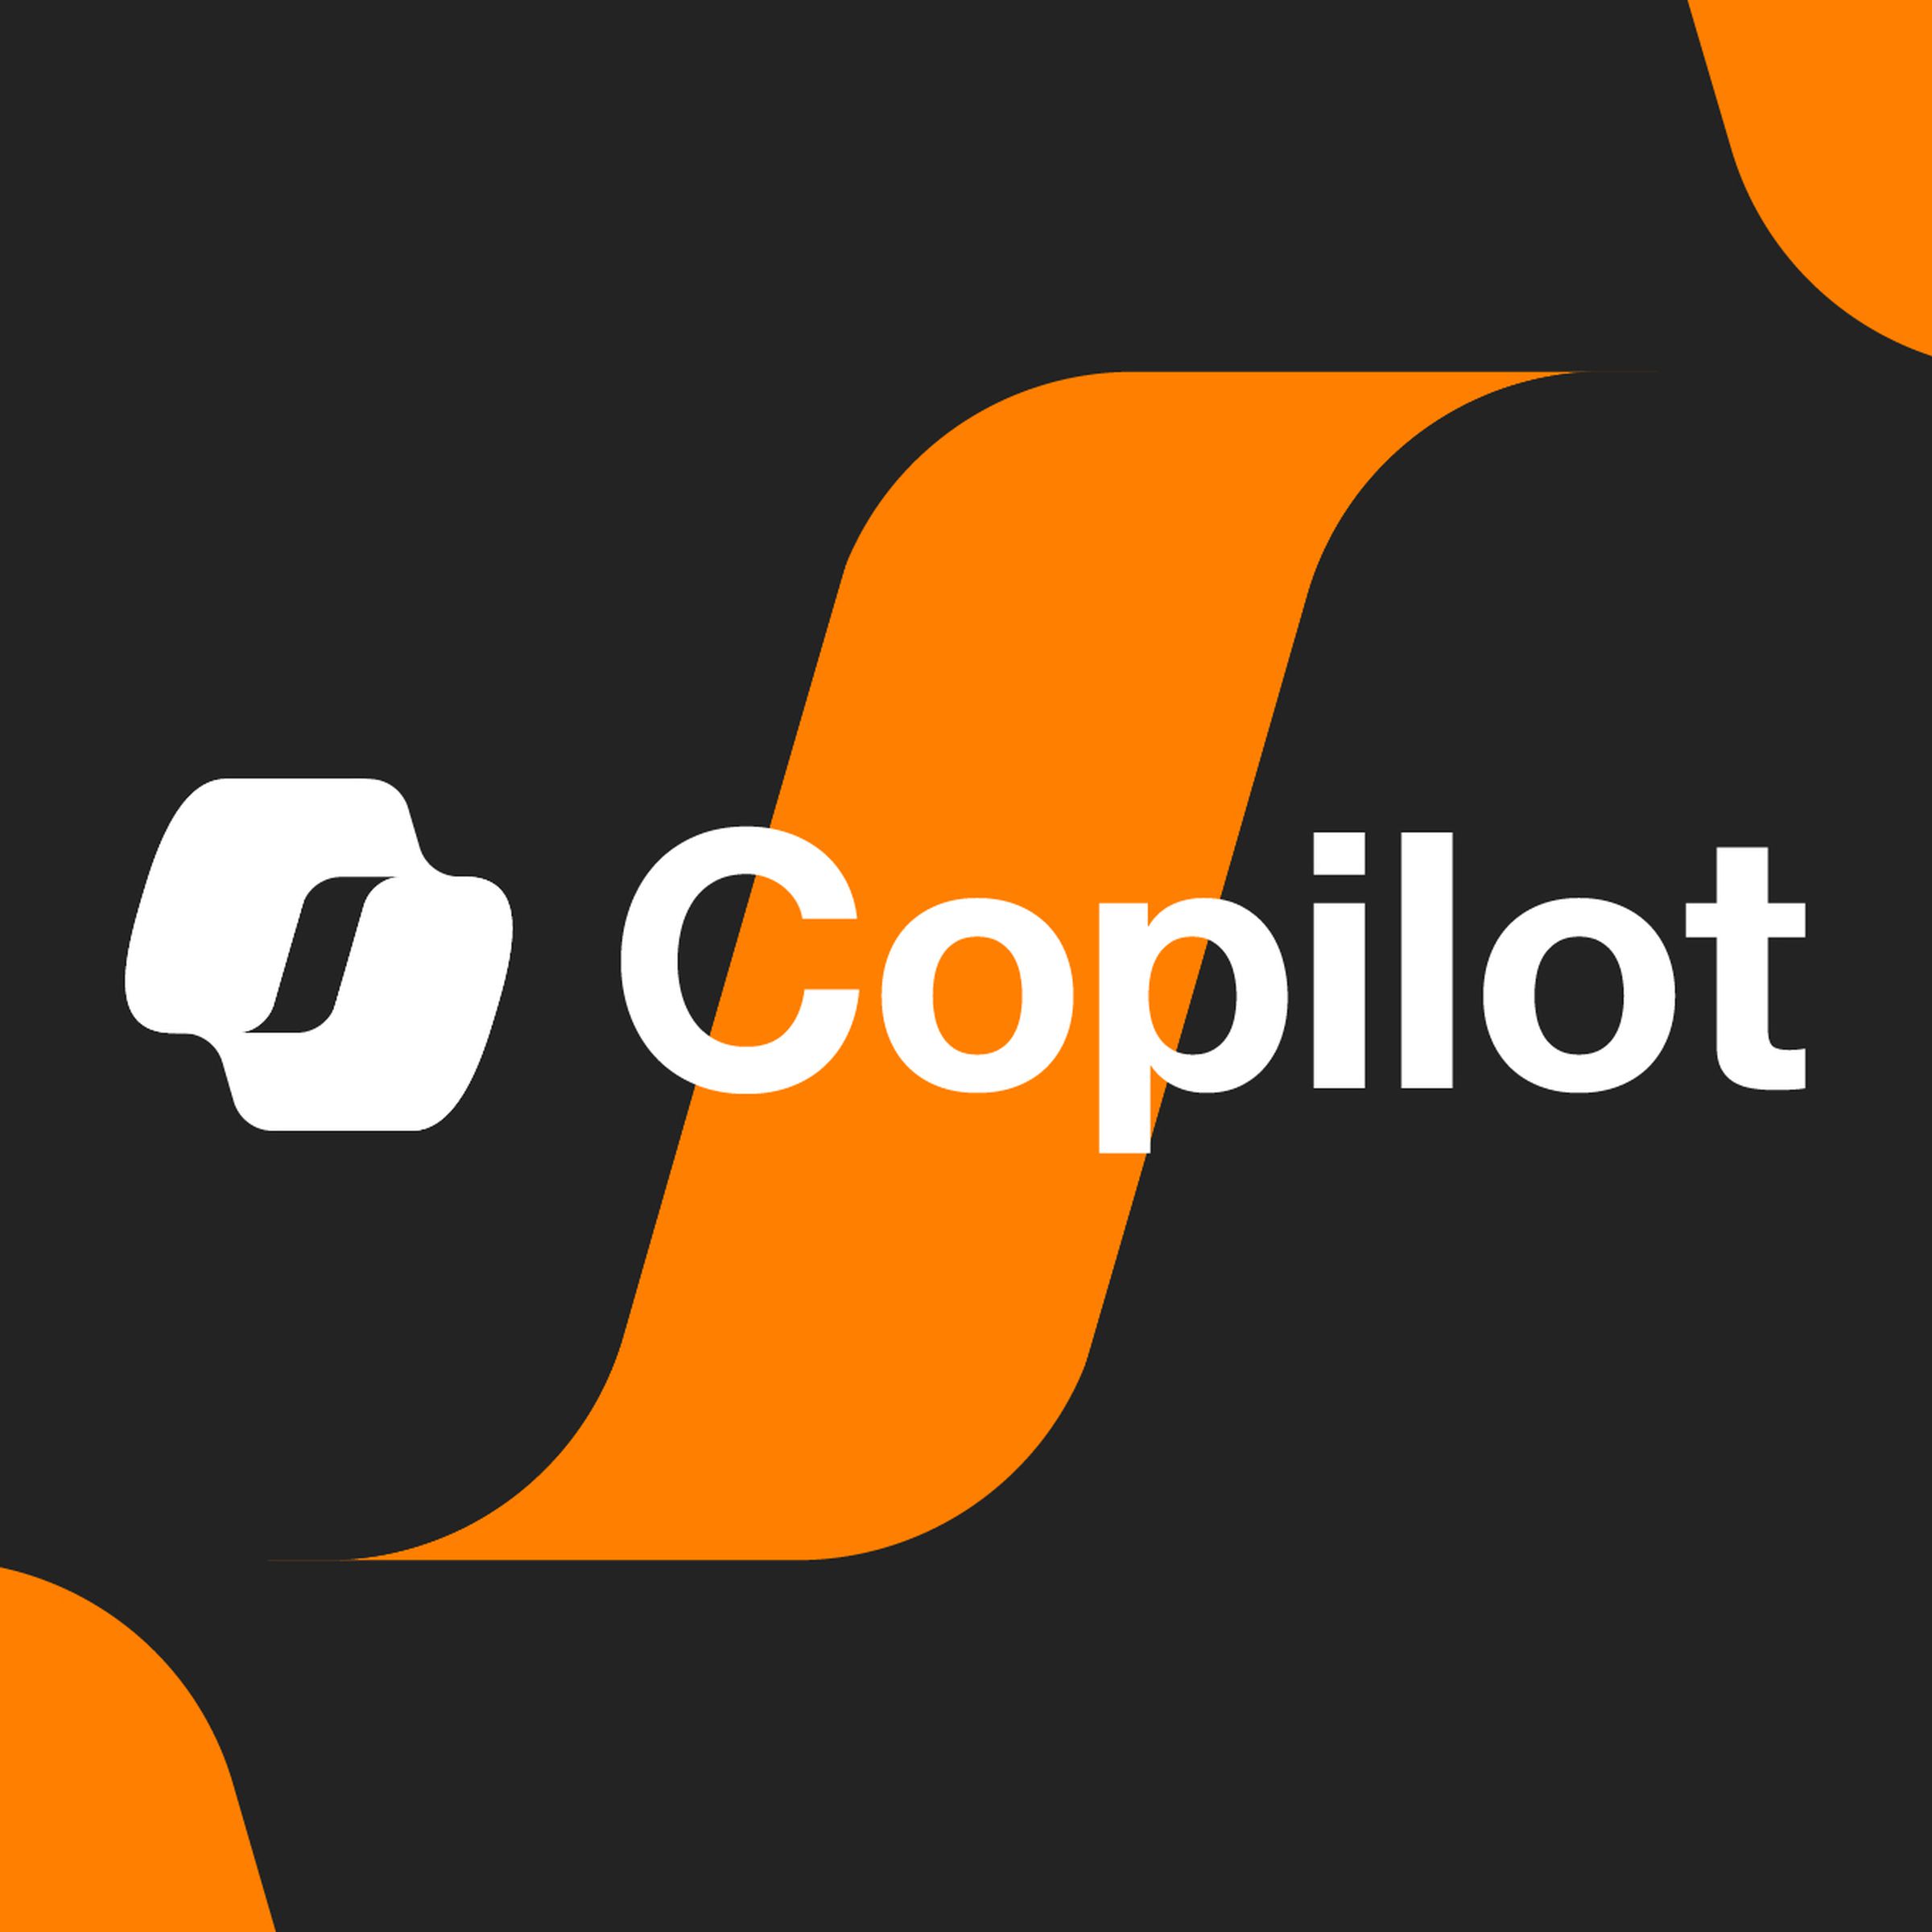 Vector collage of the Microsoft Copilot logo.